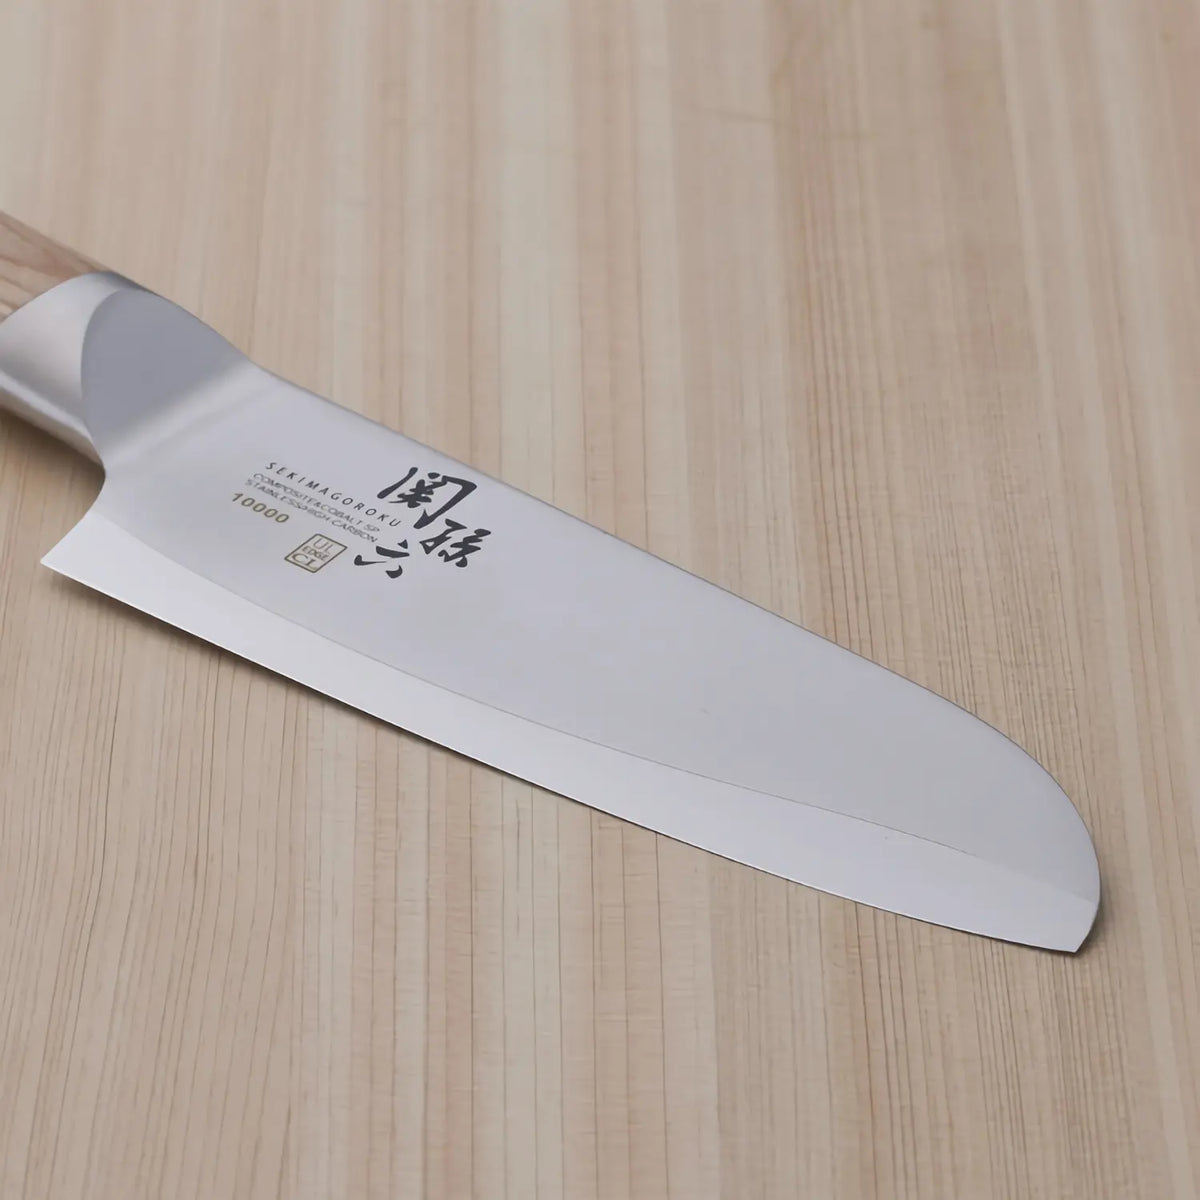 Seki Magoroku 10000CL Stainless Steel Santoku Knife